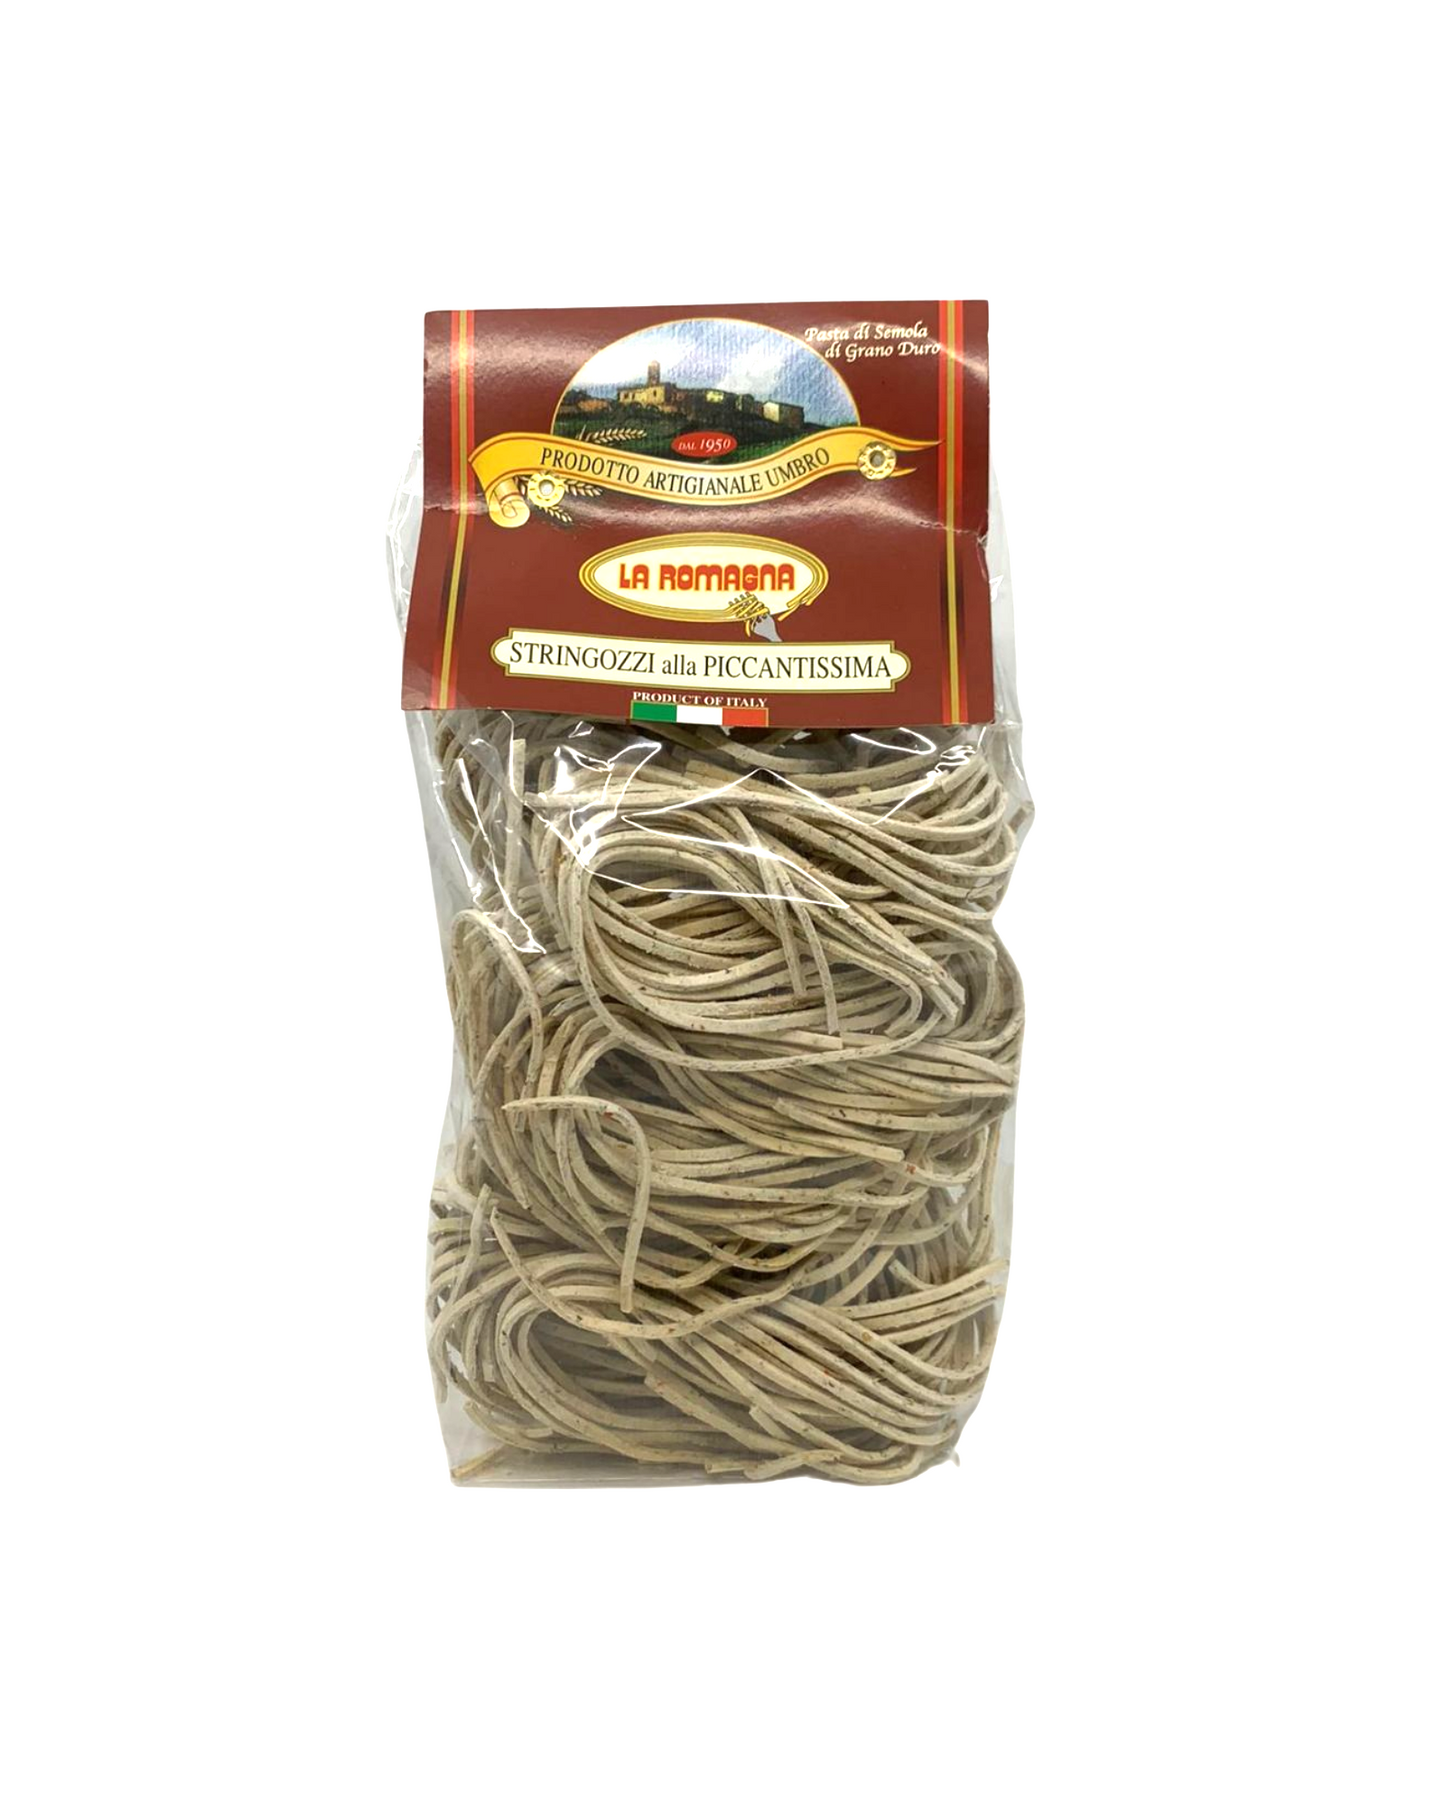 Artisan pasta “La Romagna”-Stringozzi piccantissima